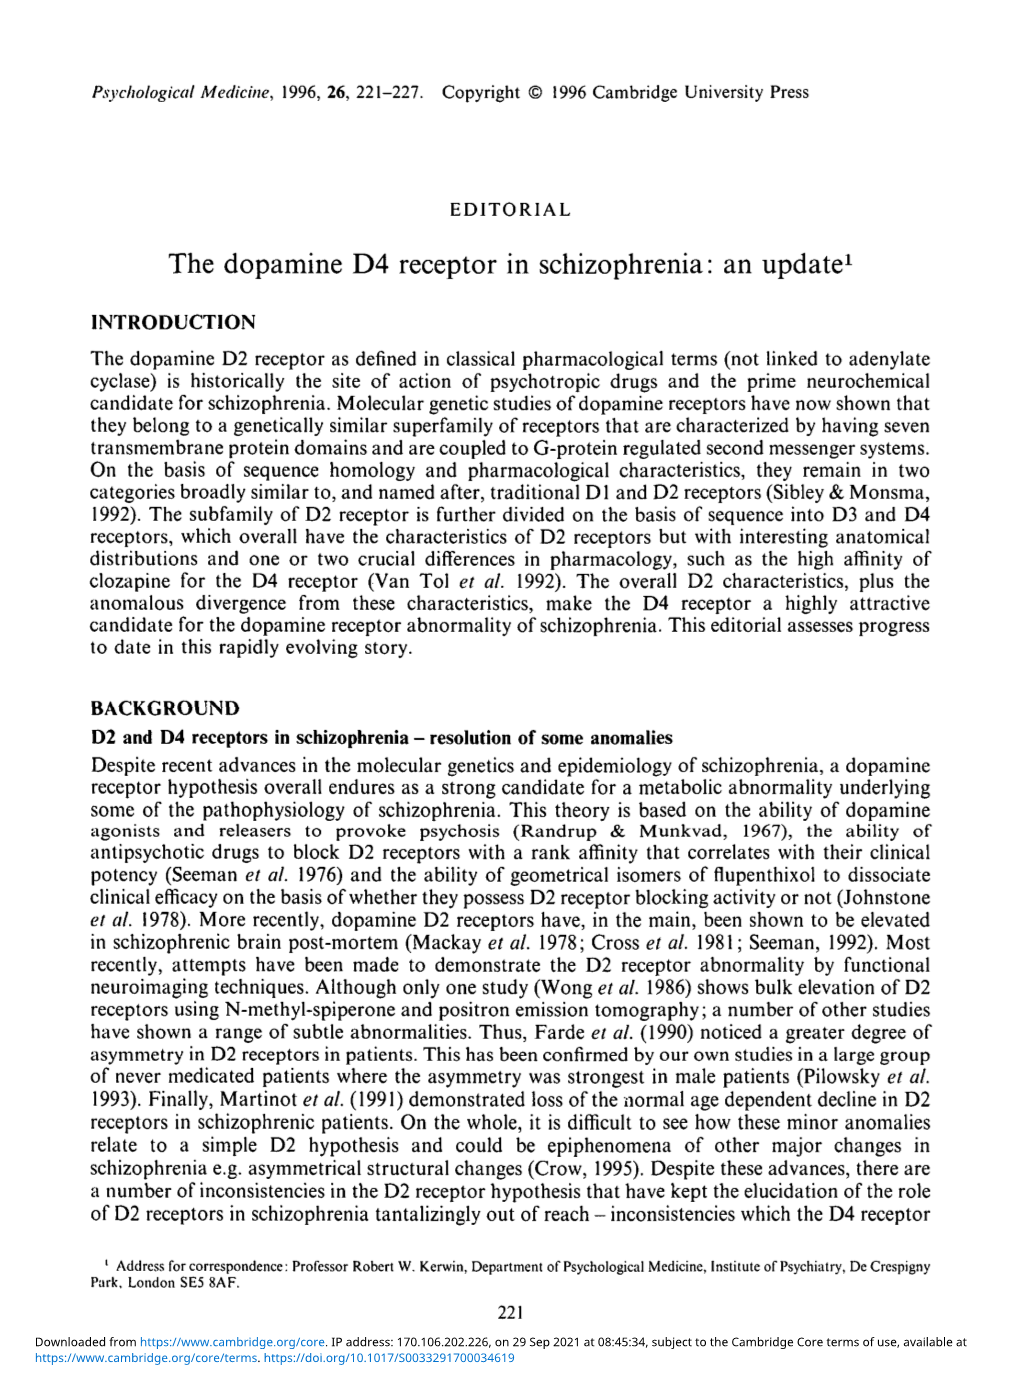 The Dopamine D4 Receptor in Schizophrenia: an Update1